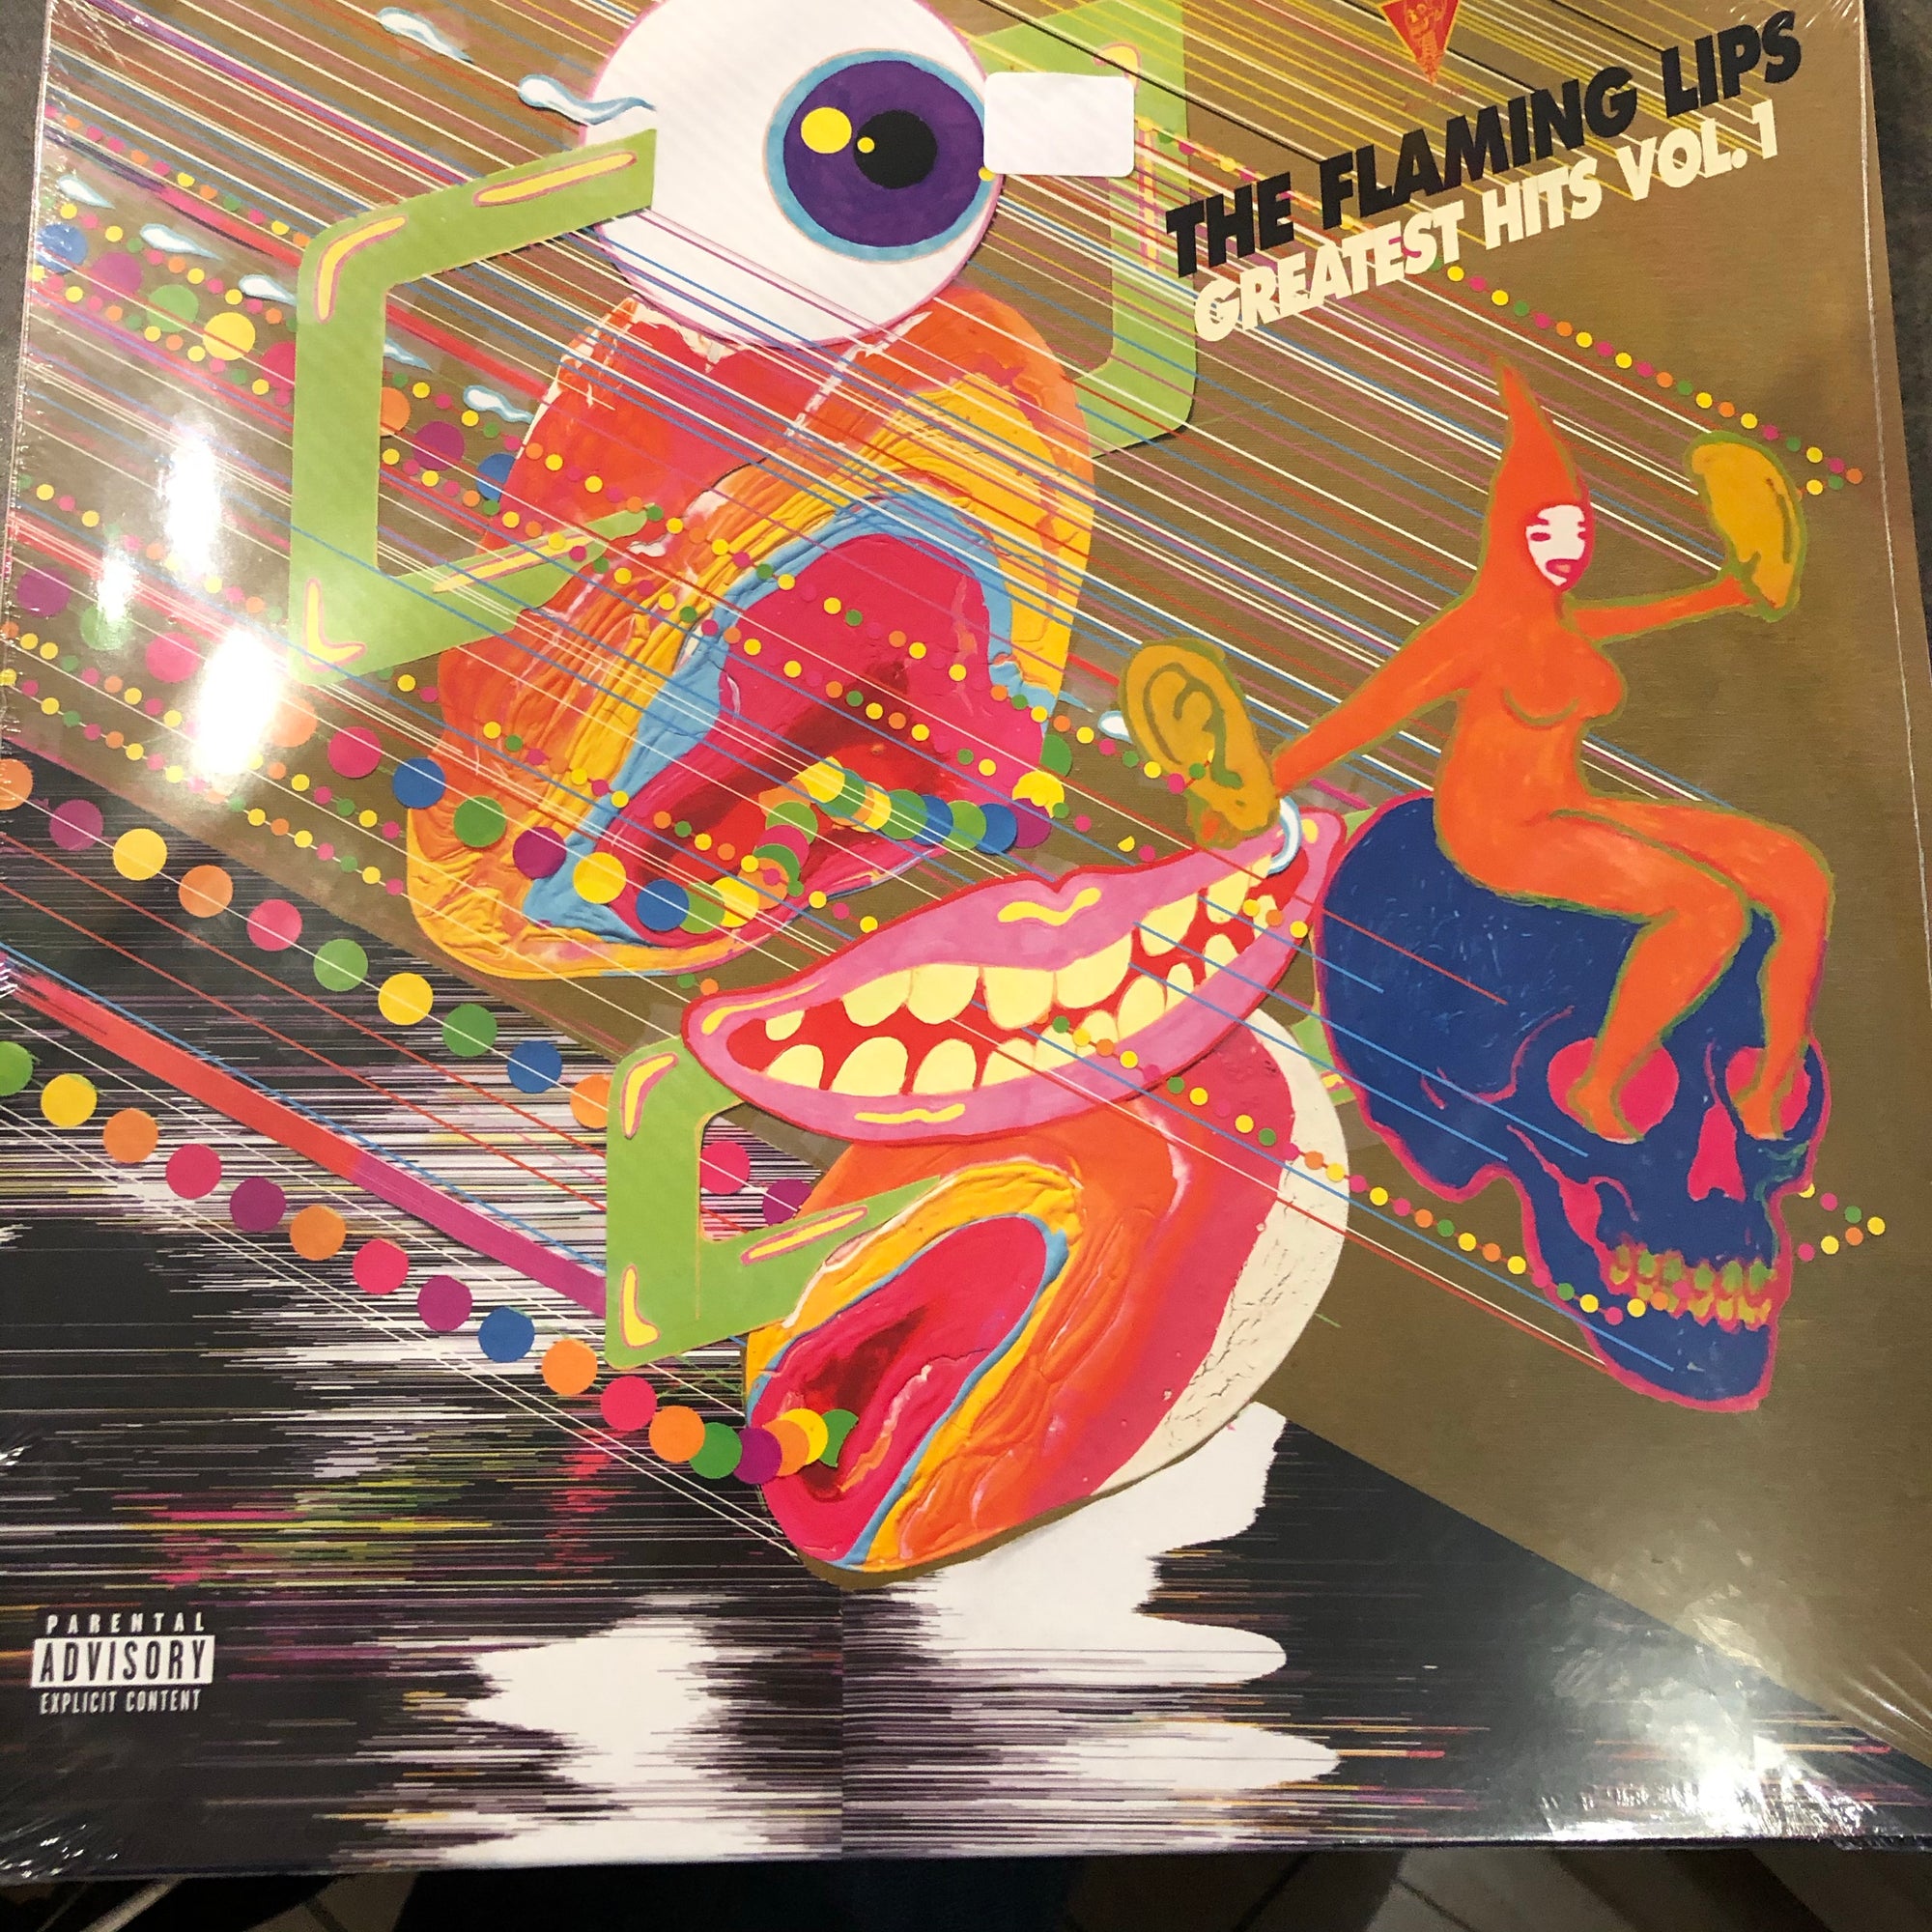 Flaming Lips - Greatest Hits Vol 1 (Vinyl LP)